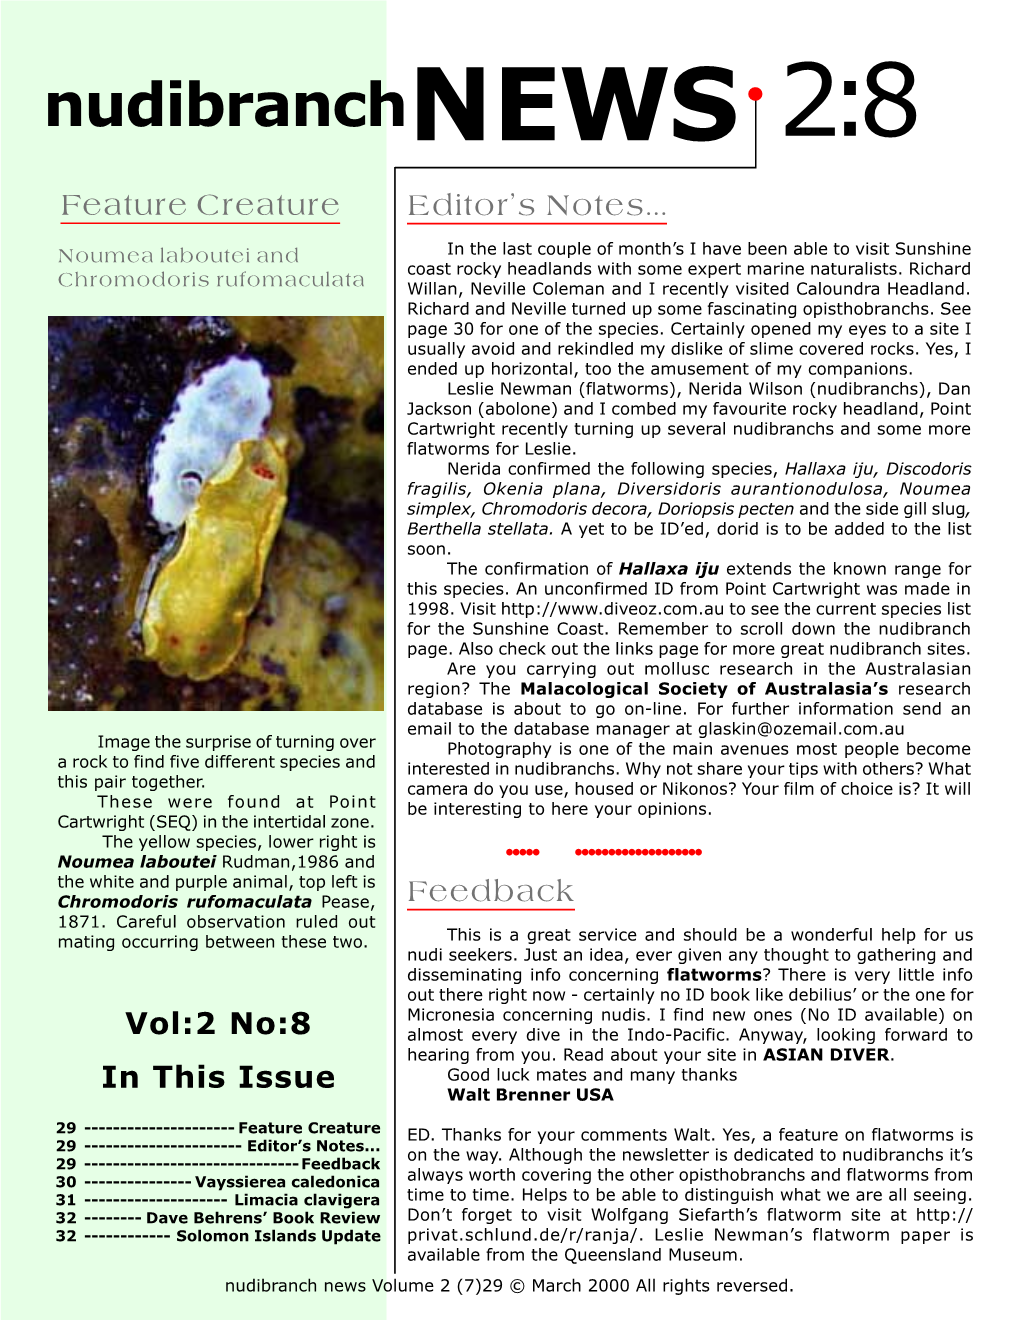 Australian Nudibranch News